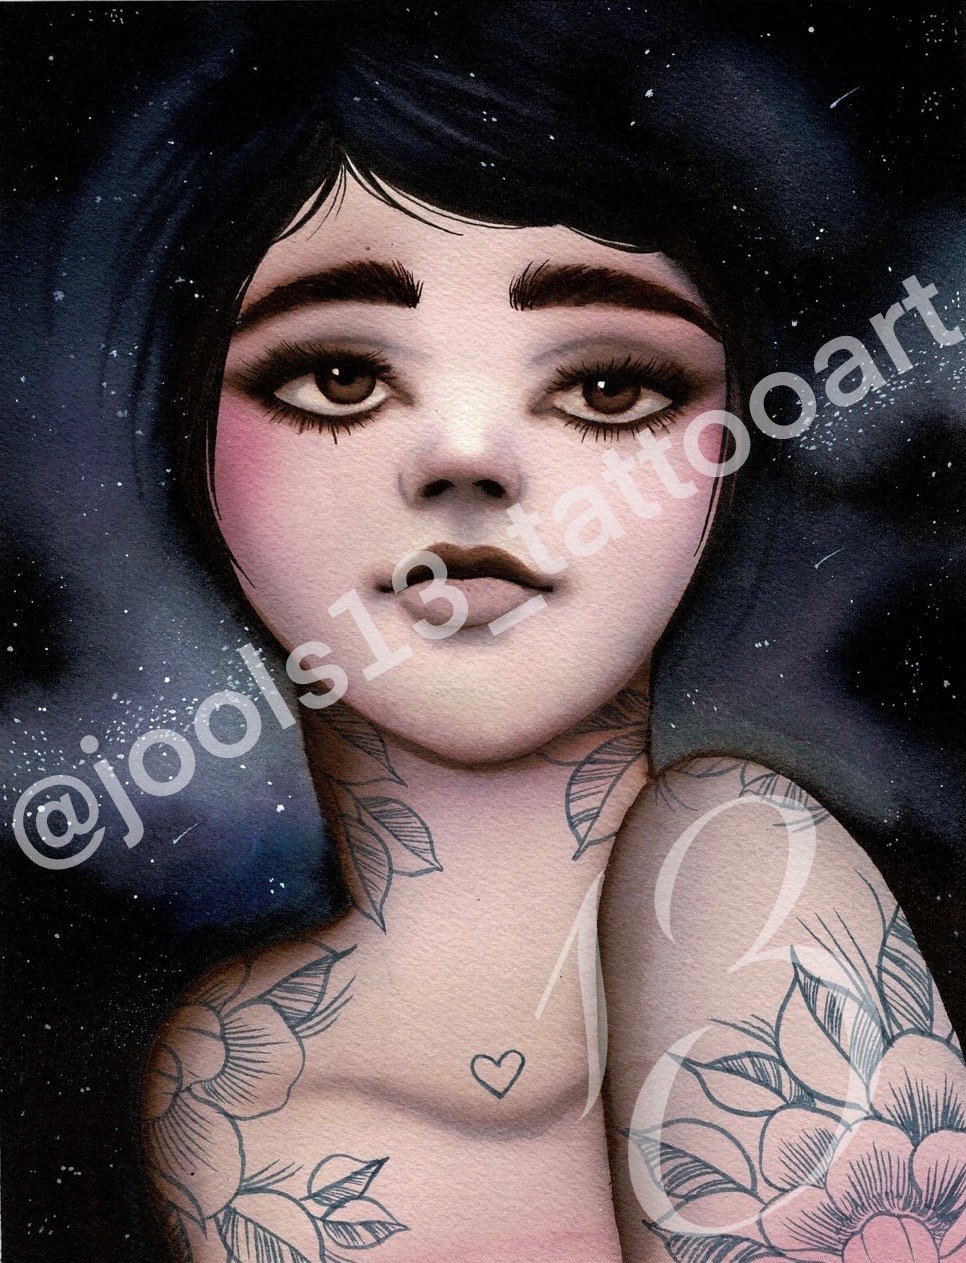 Artprint "Galaxy Girl" by Jools